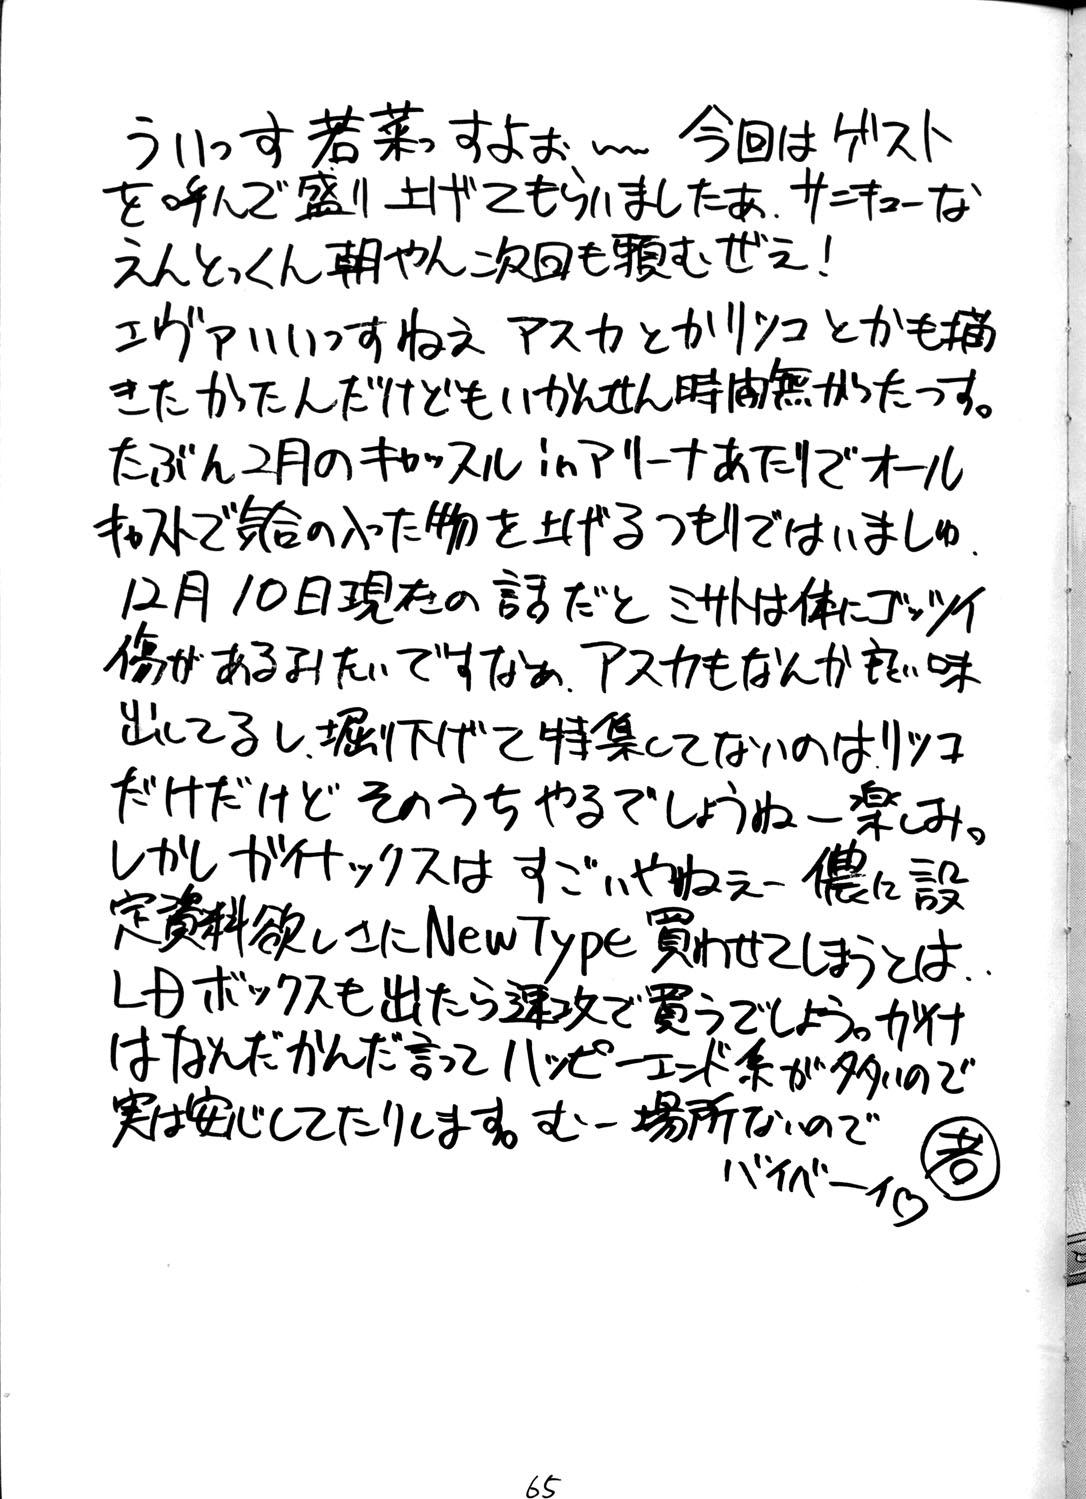 Ball Licking Kage Mamoru 2 - Neon genesis evangelion Tenchi muyo Slayers POV - Page 64